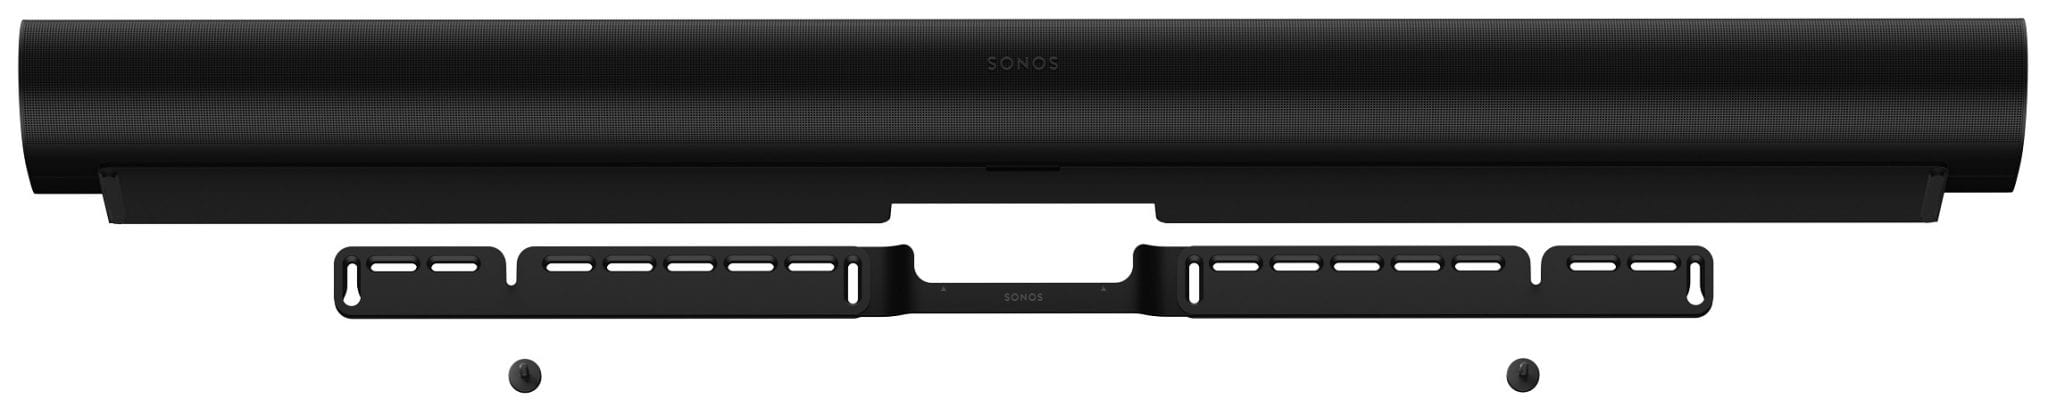 Sonos ARC wallmount - Speaker beugel